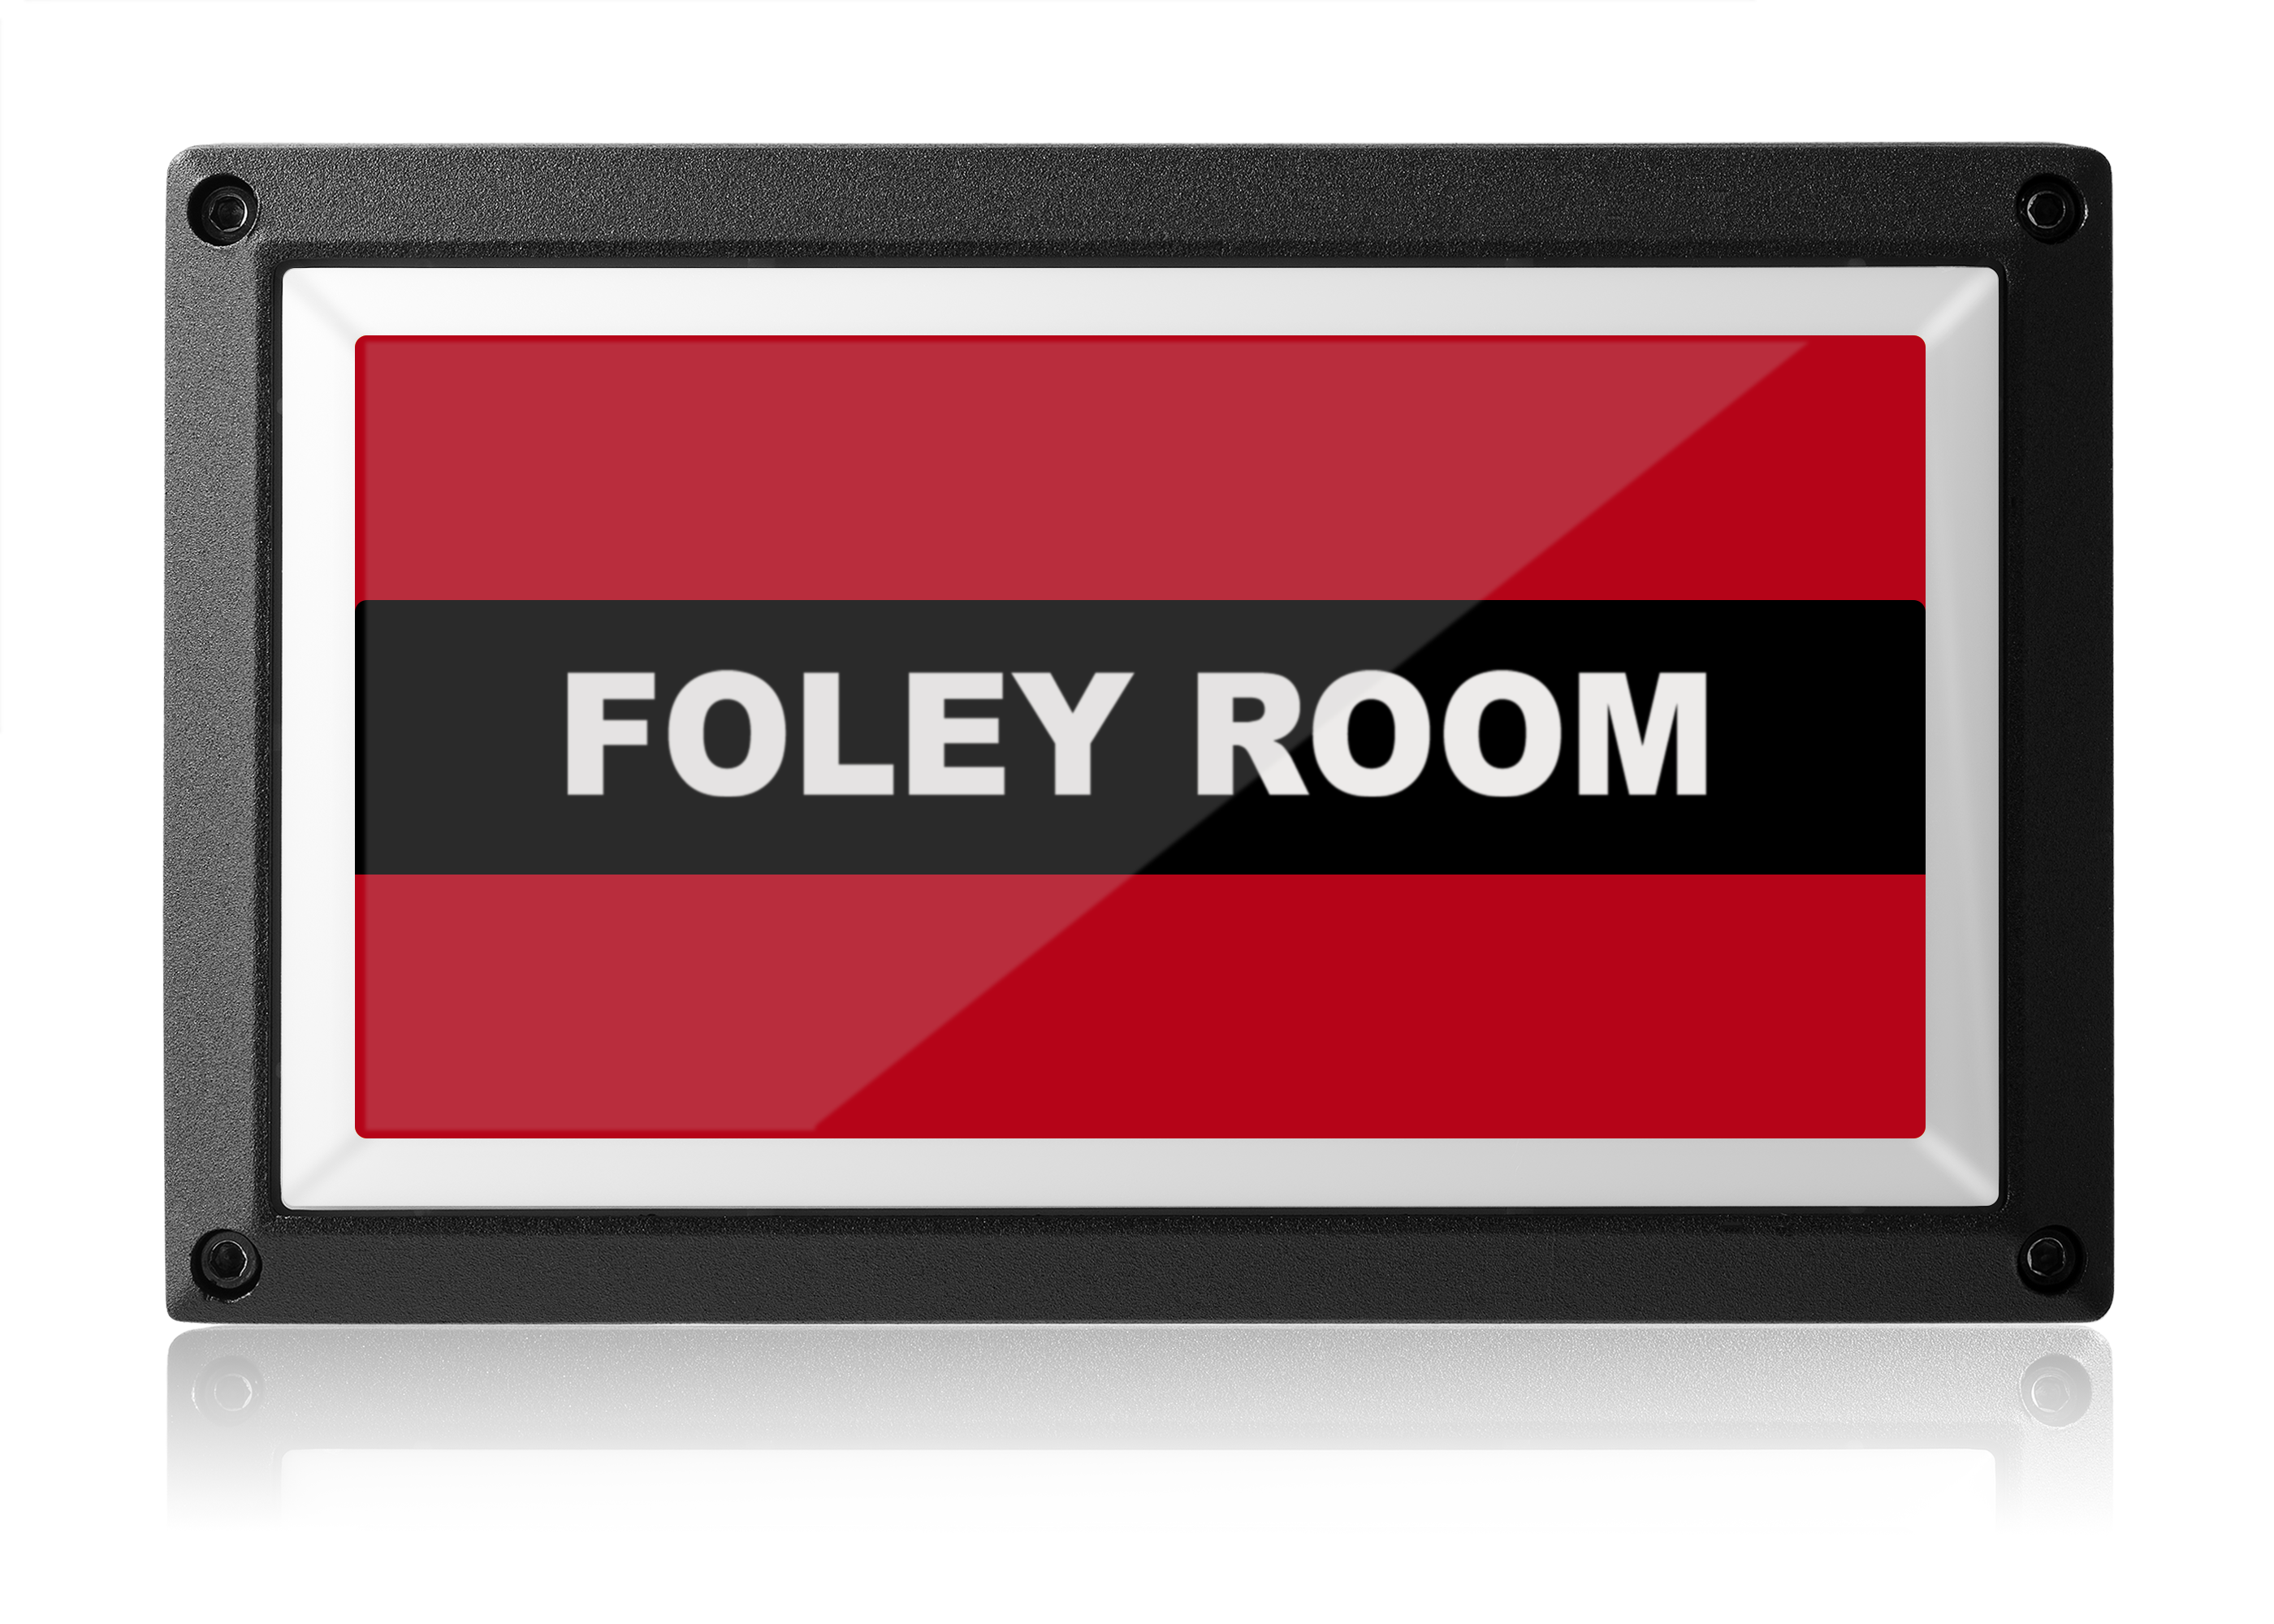 Foley Room Light - Red ISO - Rekall Dynamics LED Sign-Red-Low Voltage (12-24v DC)-